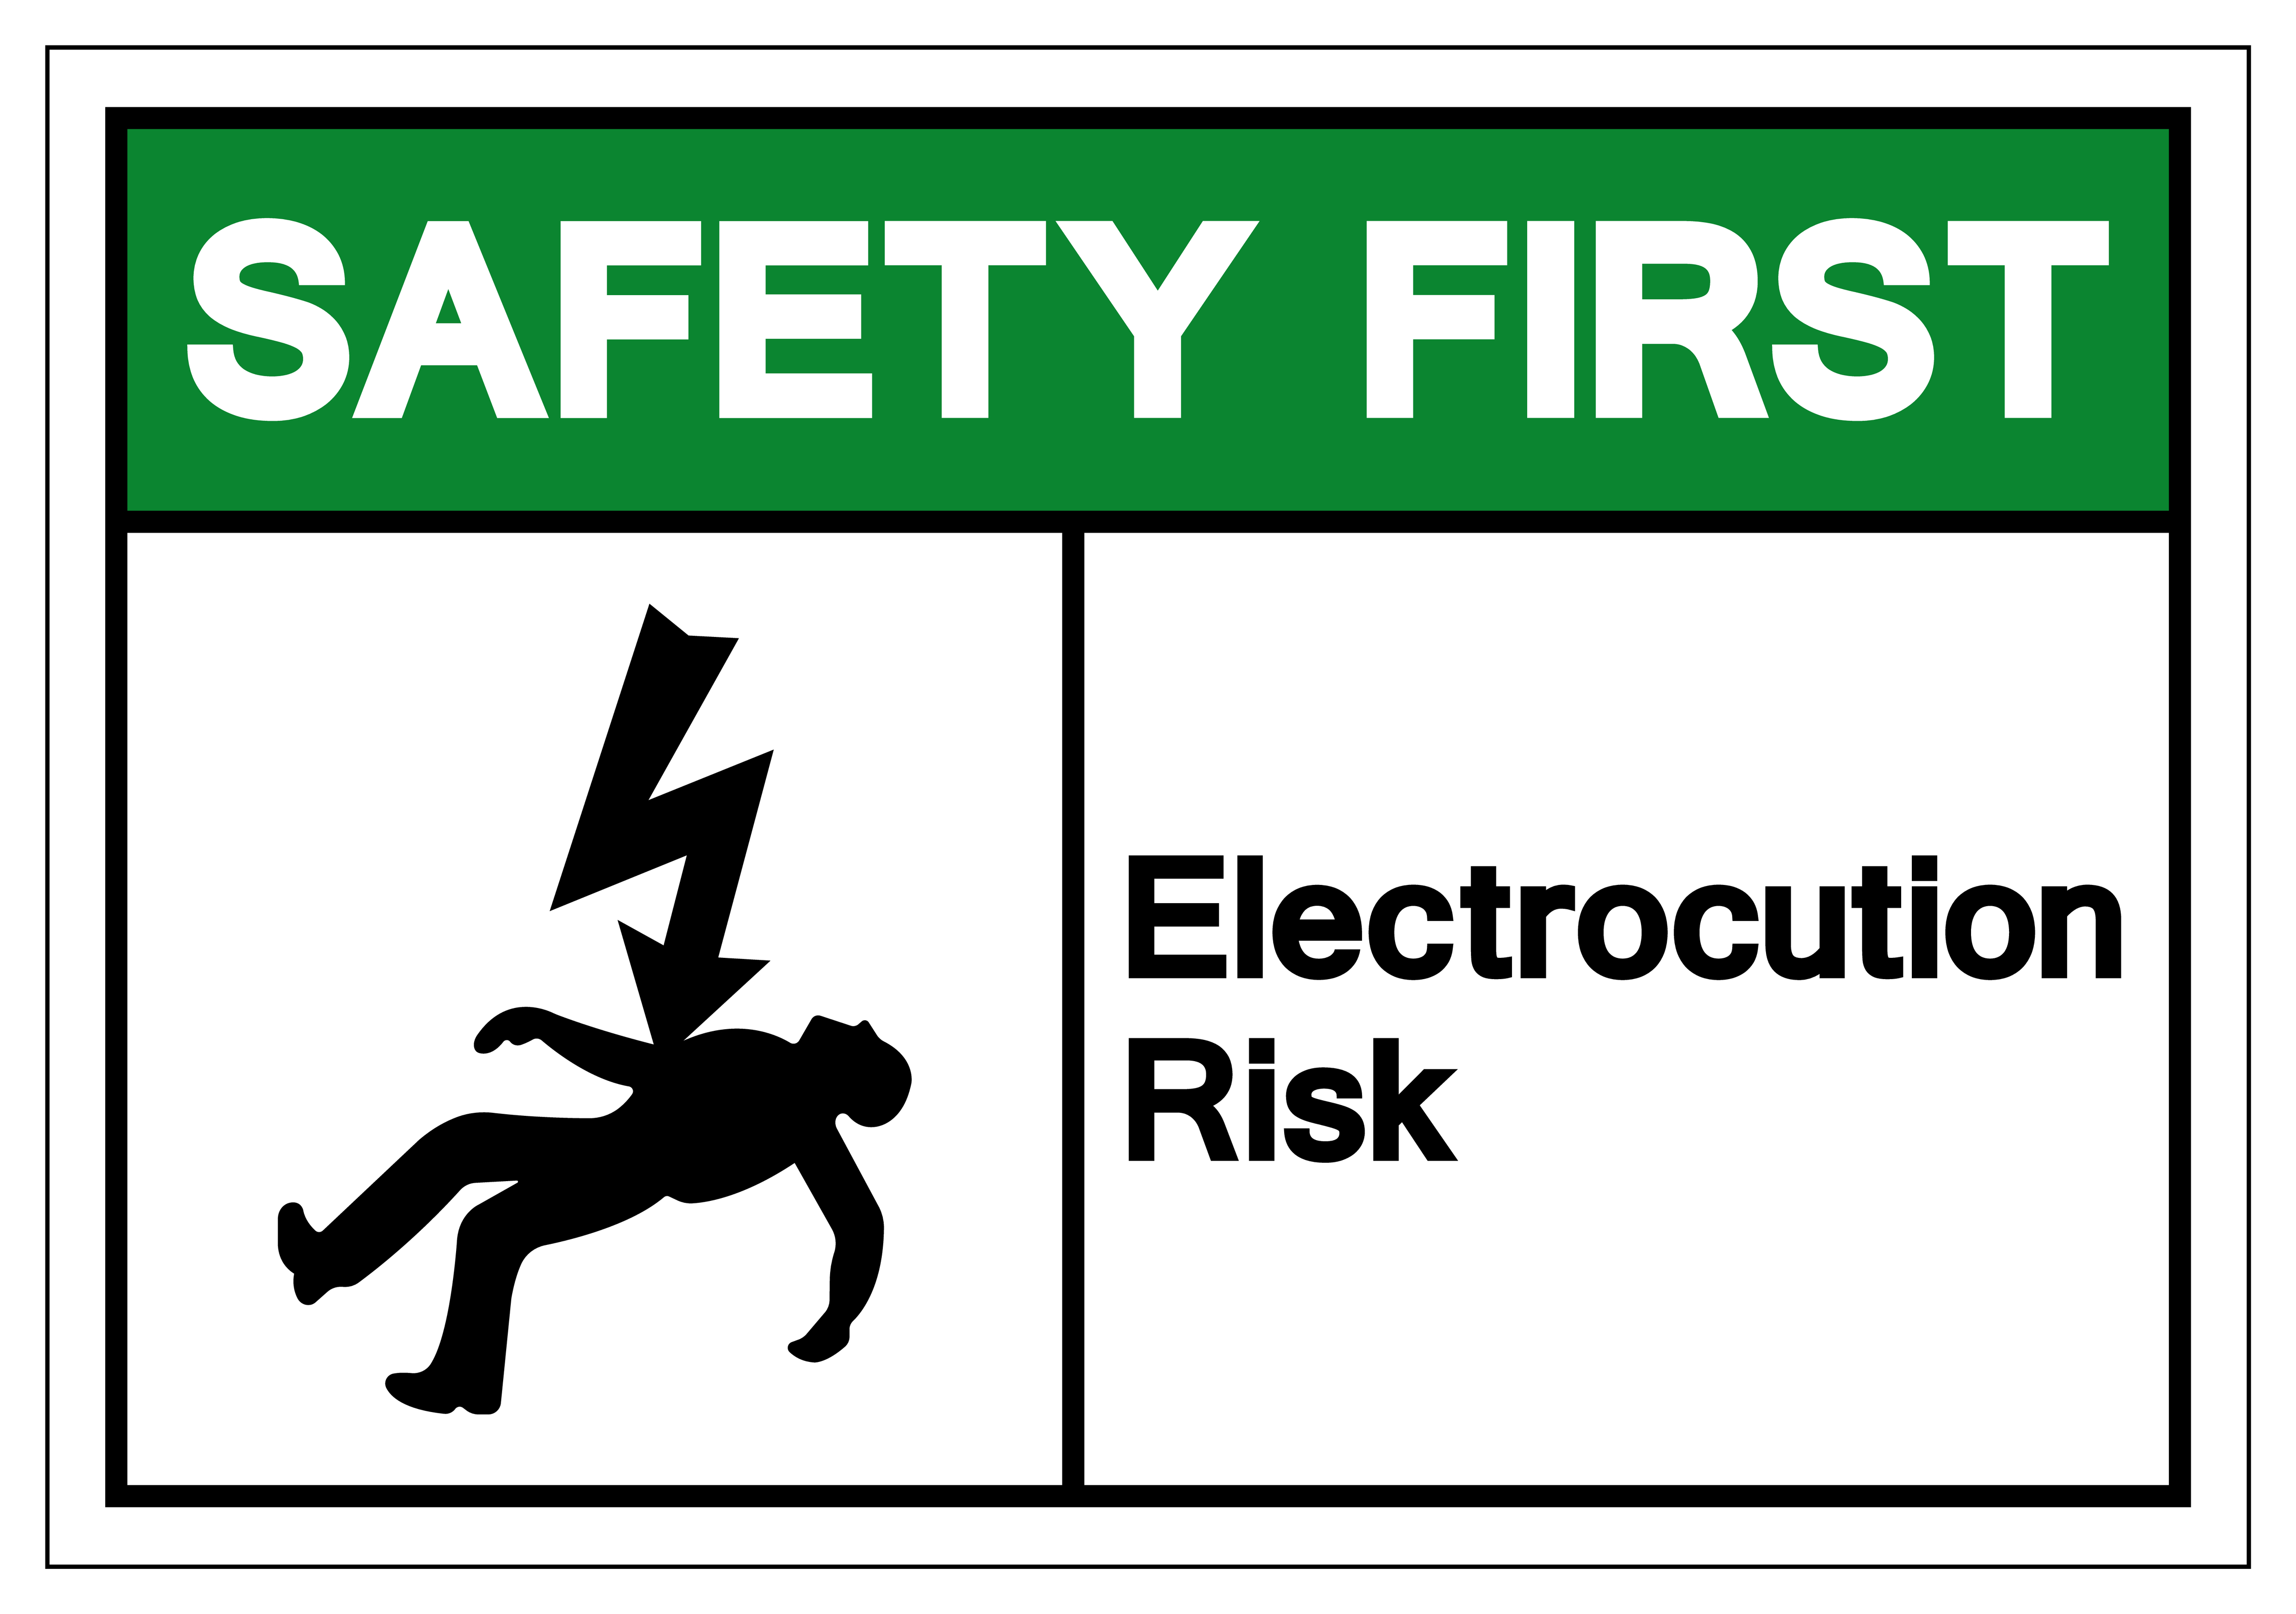 Avoid risk of electrocution